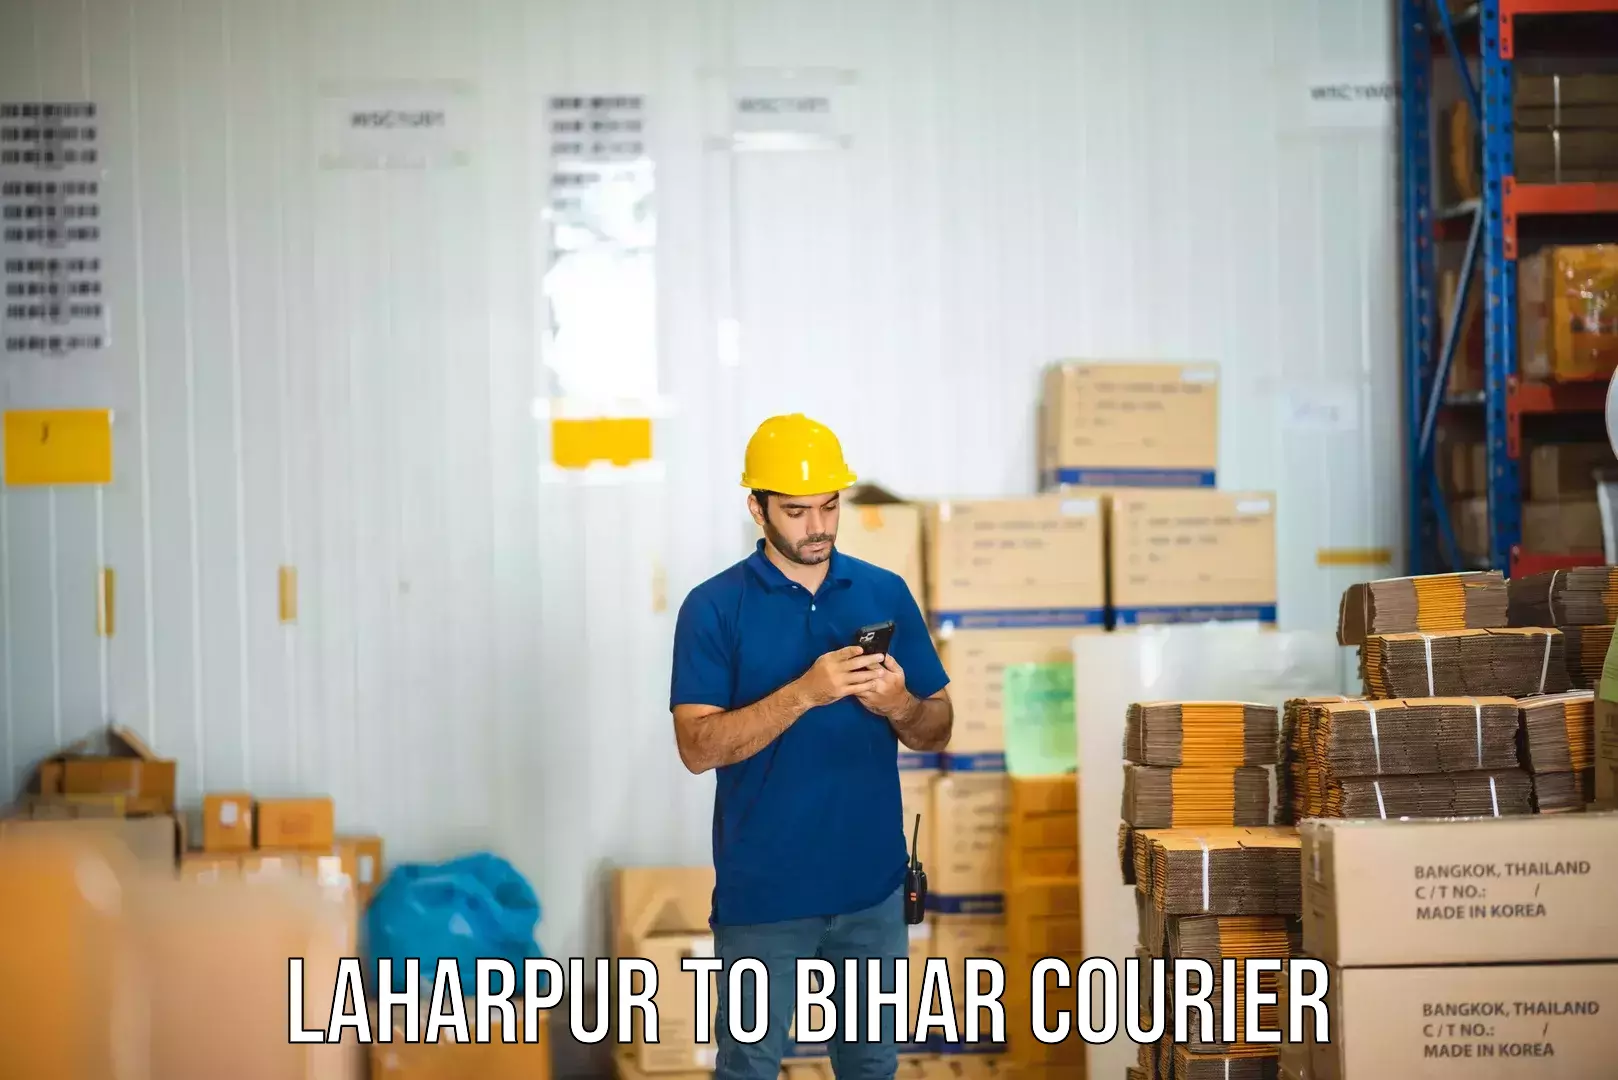 Efficient order fulfillment Laharpur to Dinara